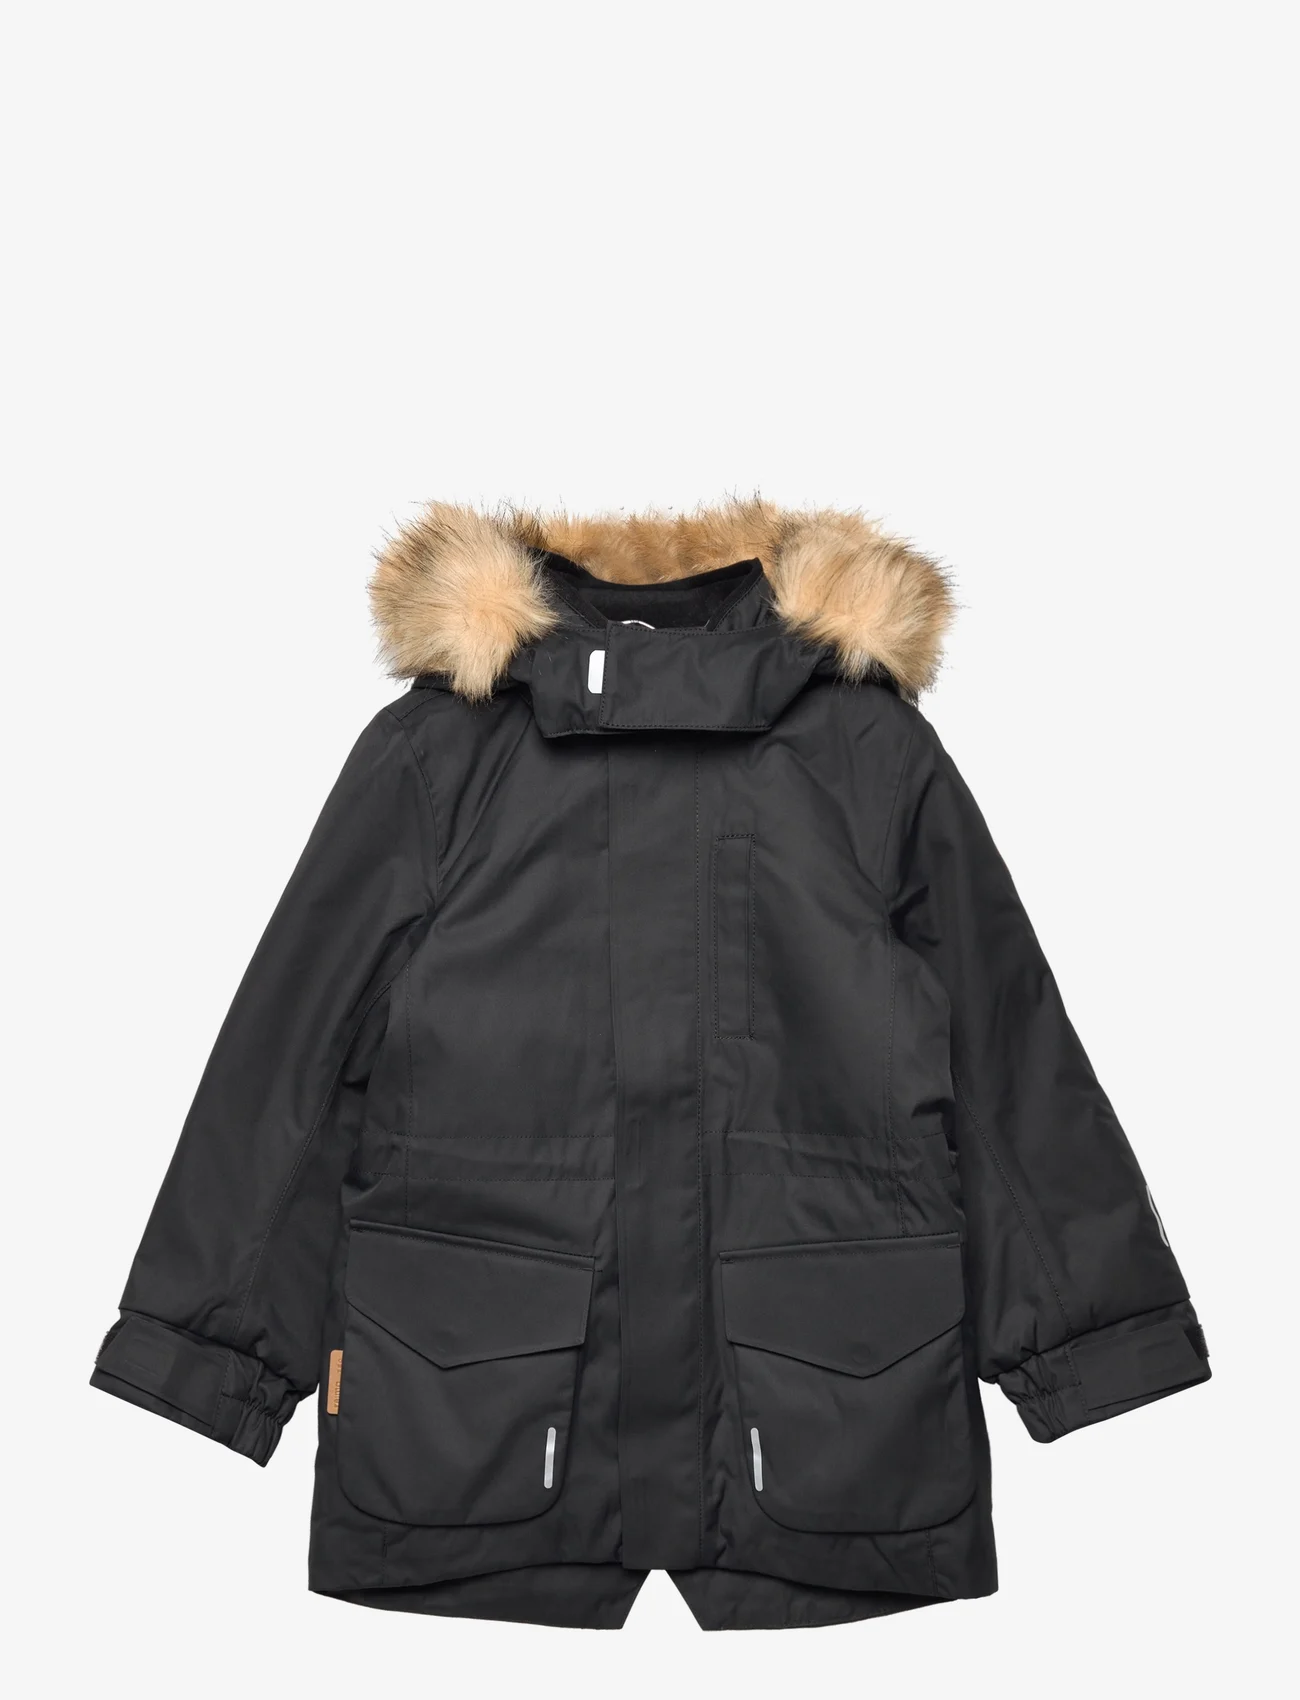 Reima - Reimatec winter jacket, Naapuri - parkas - black - 0